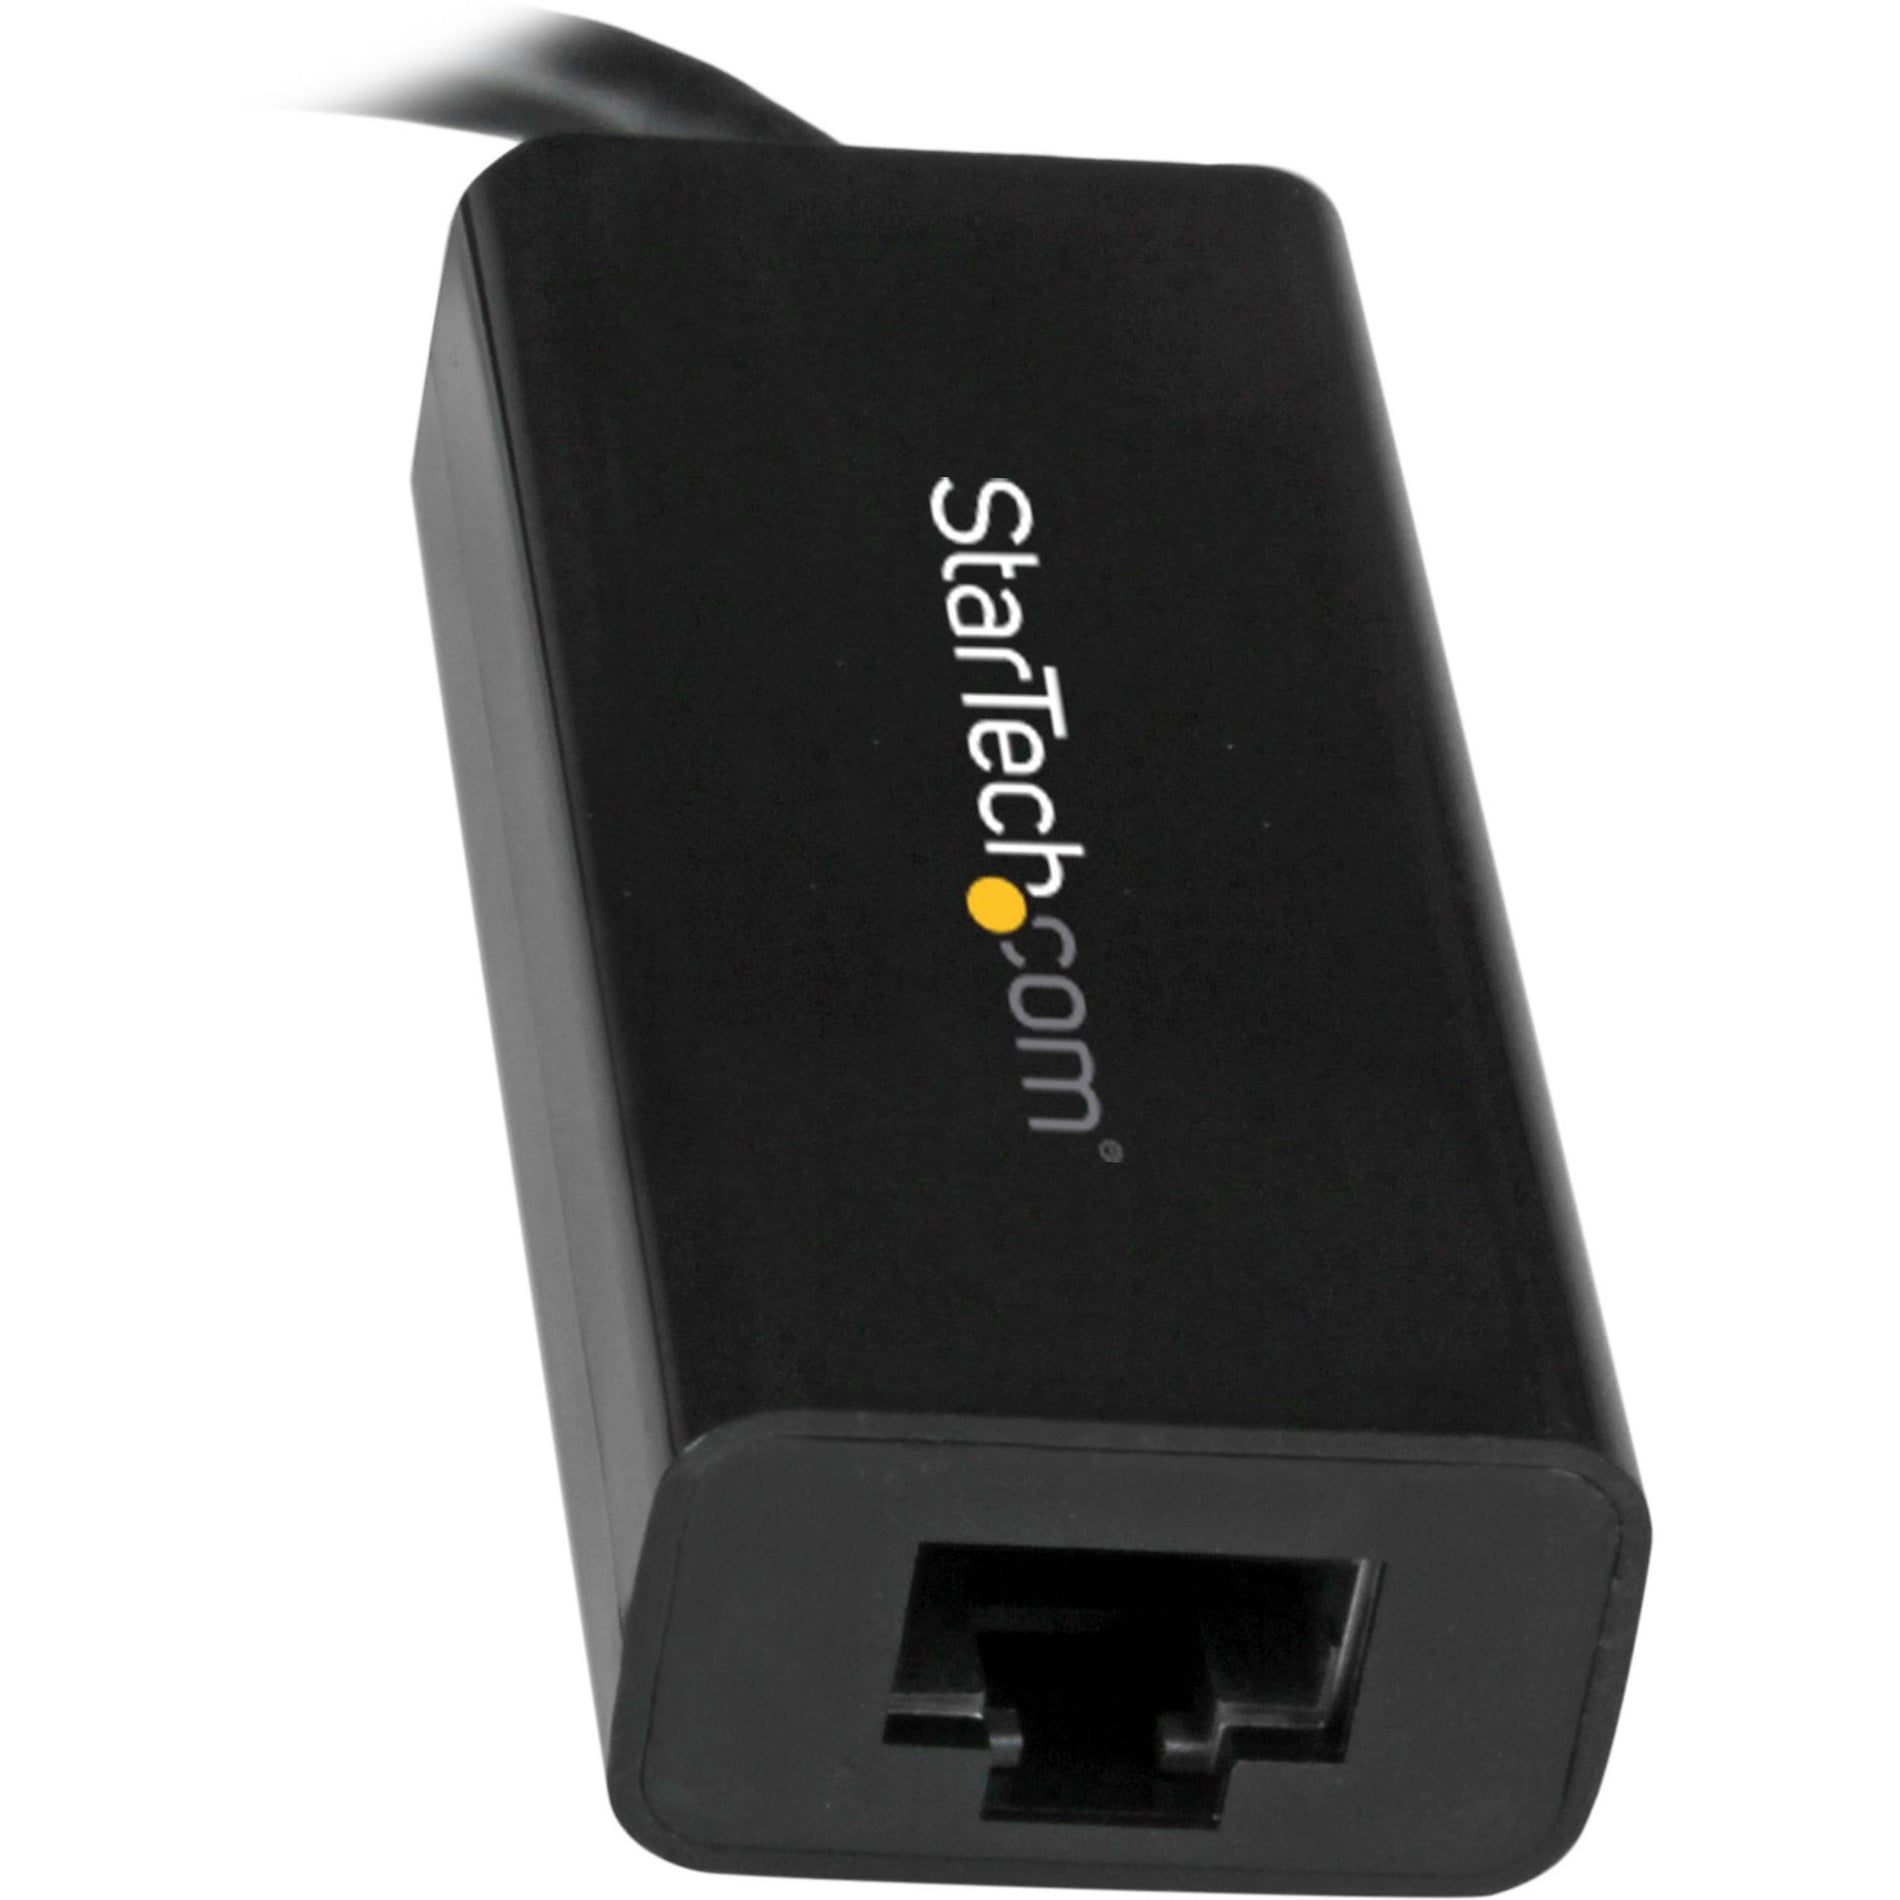 StarTech.com US1GC30B USB-C to Gigabit Ethernet Adapter, USB 3.1 Gen 1 (5 Gbps), Native Support